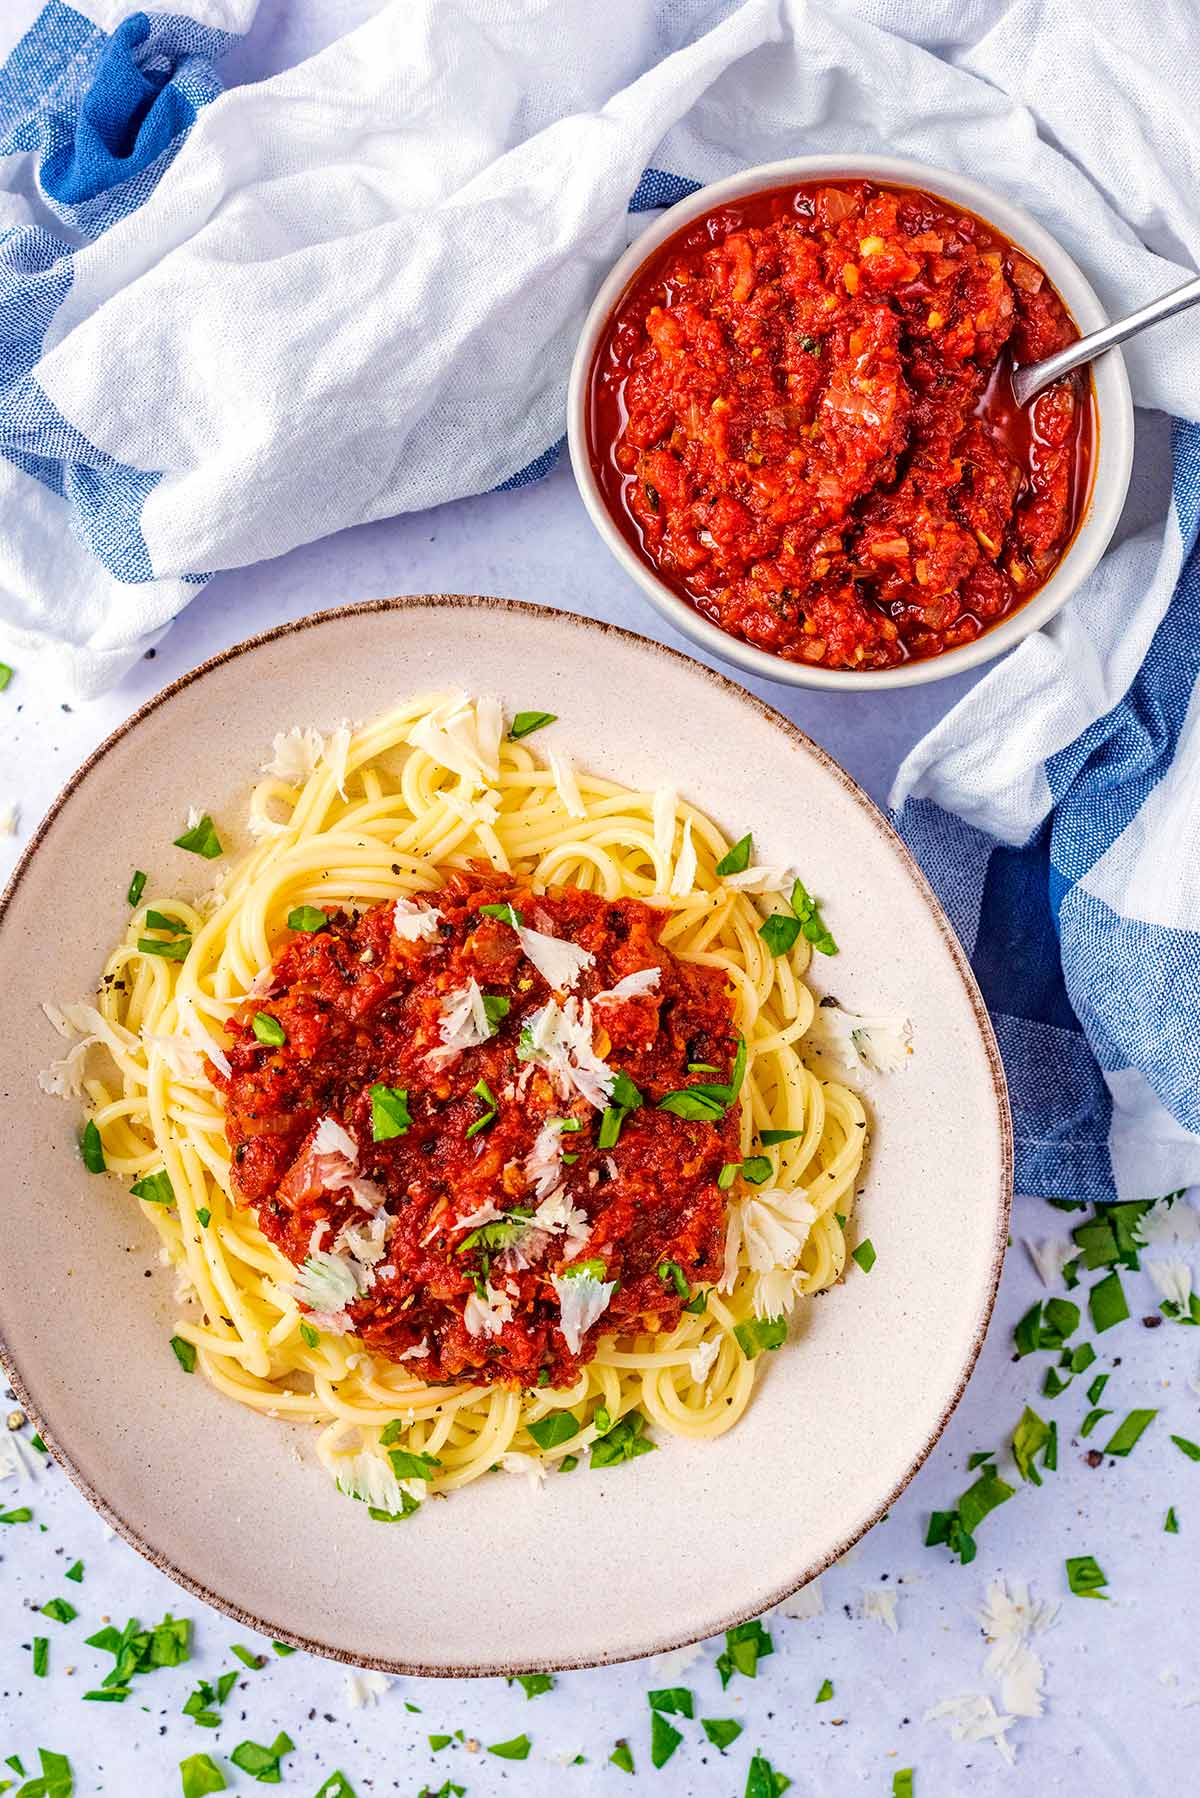 A plate of spaghetti and marinara sauce next to a small bowl of more marinara.